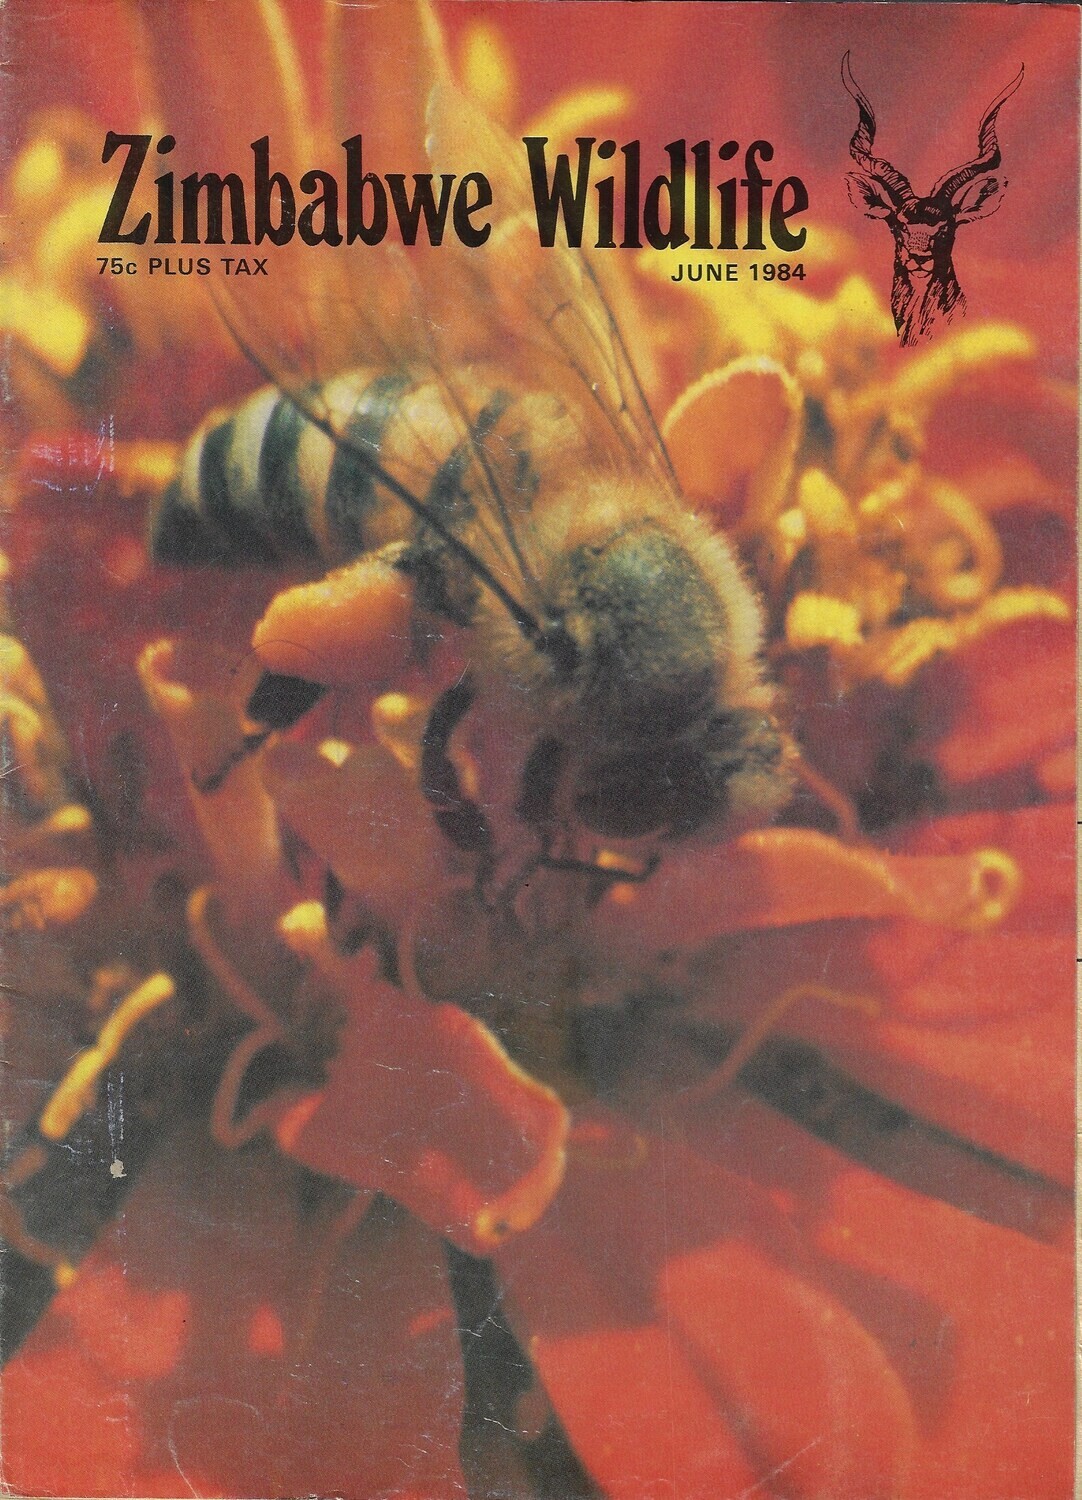 Zimbabwe Wildlife - June 1984